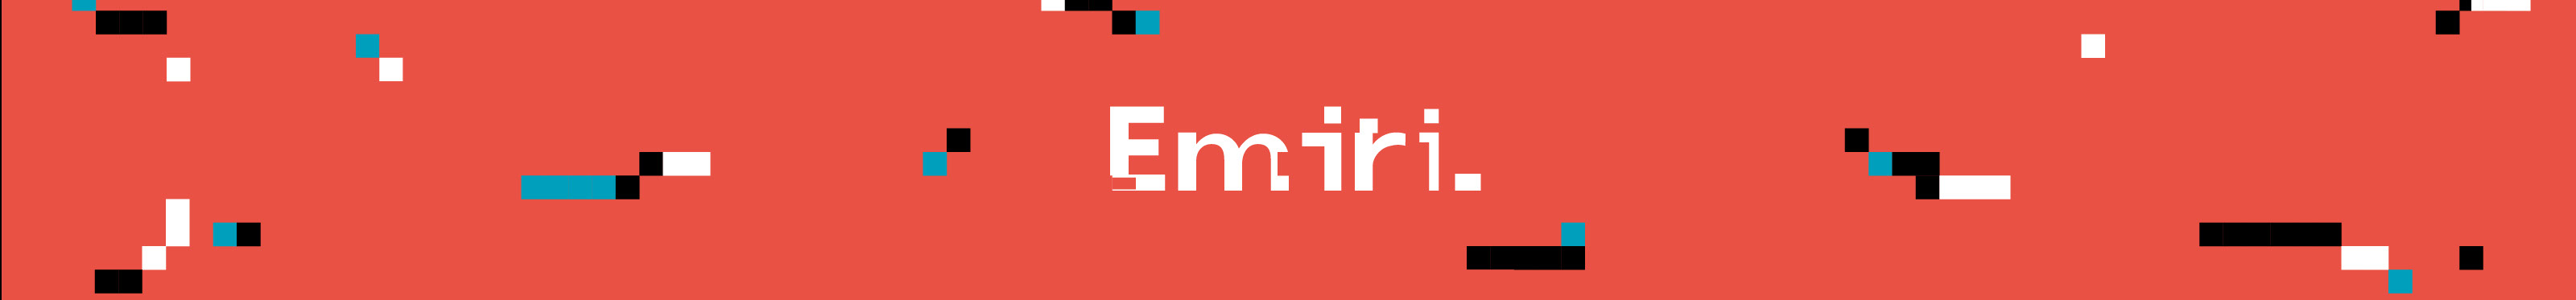 Verônica Emily | Emiri's profile banner